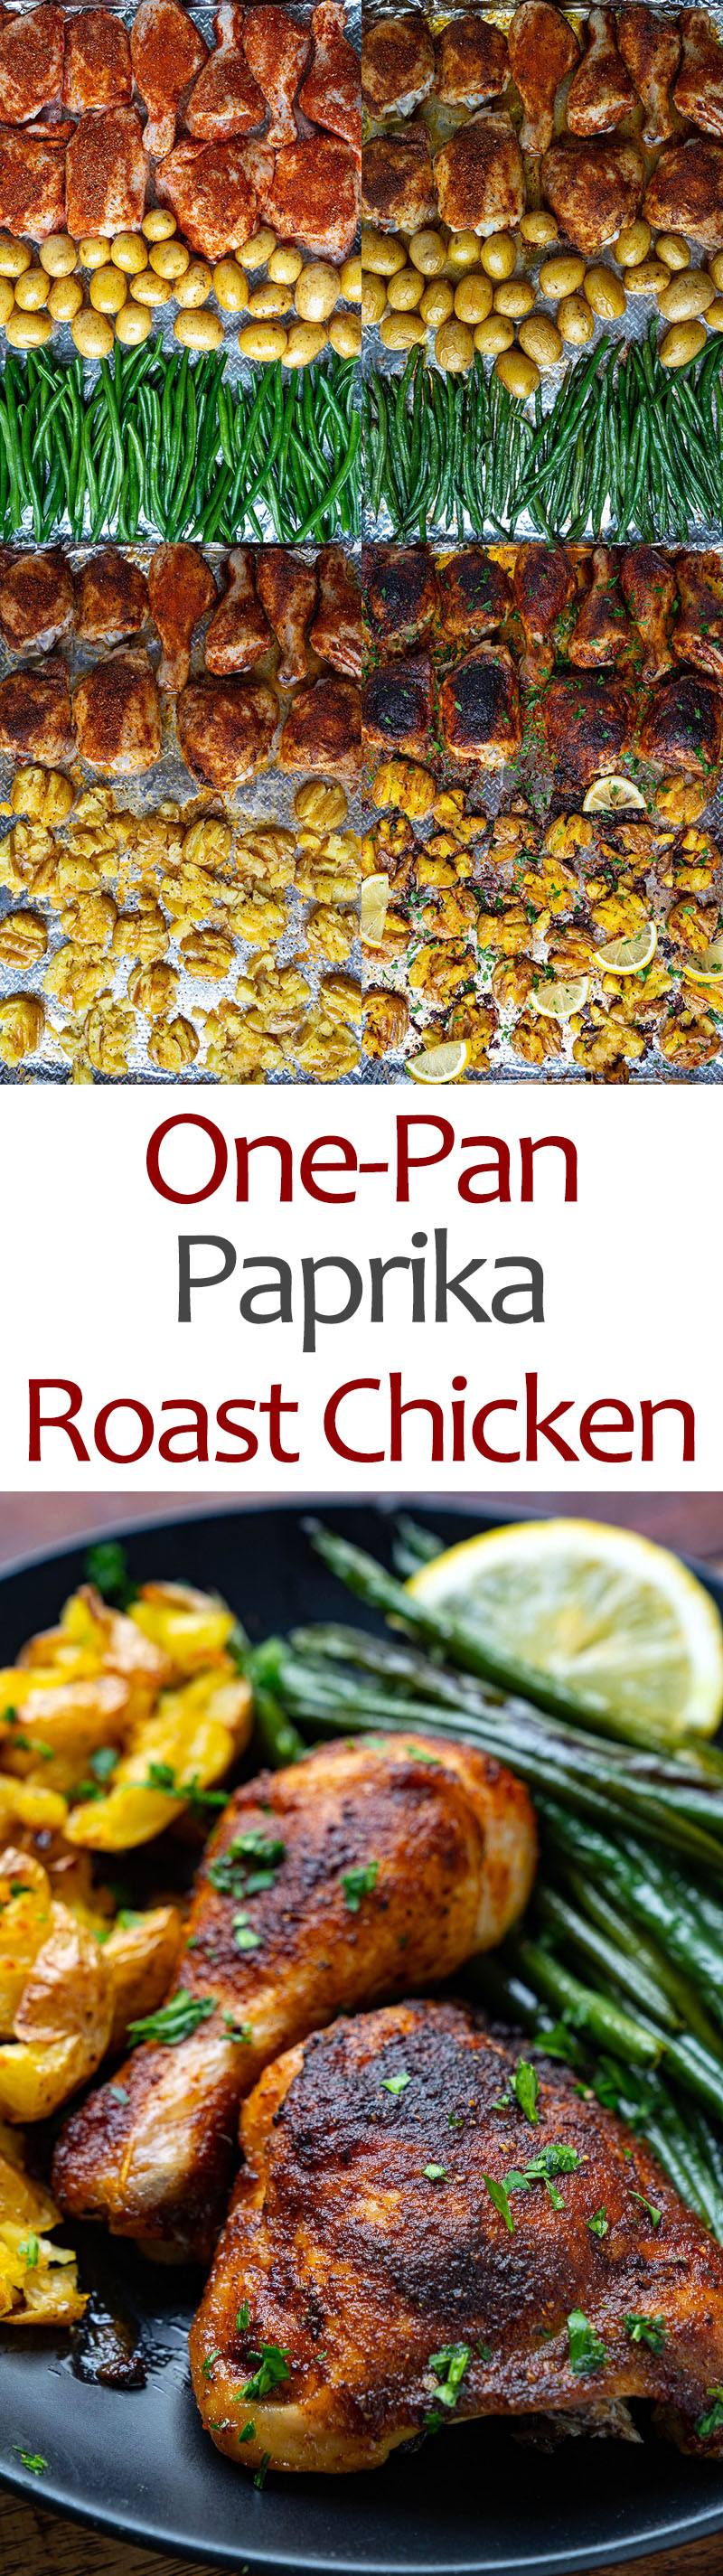 One-pan Paprika Roast Chicken